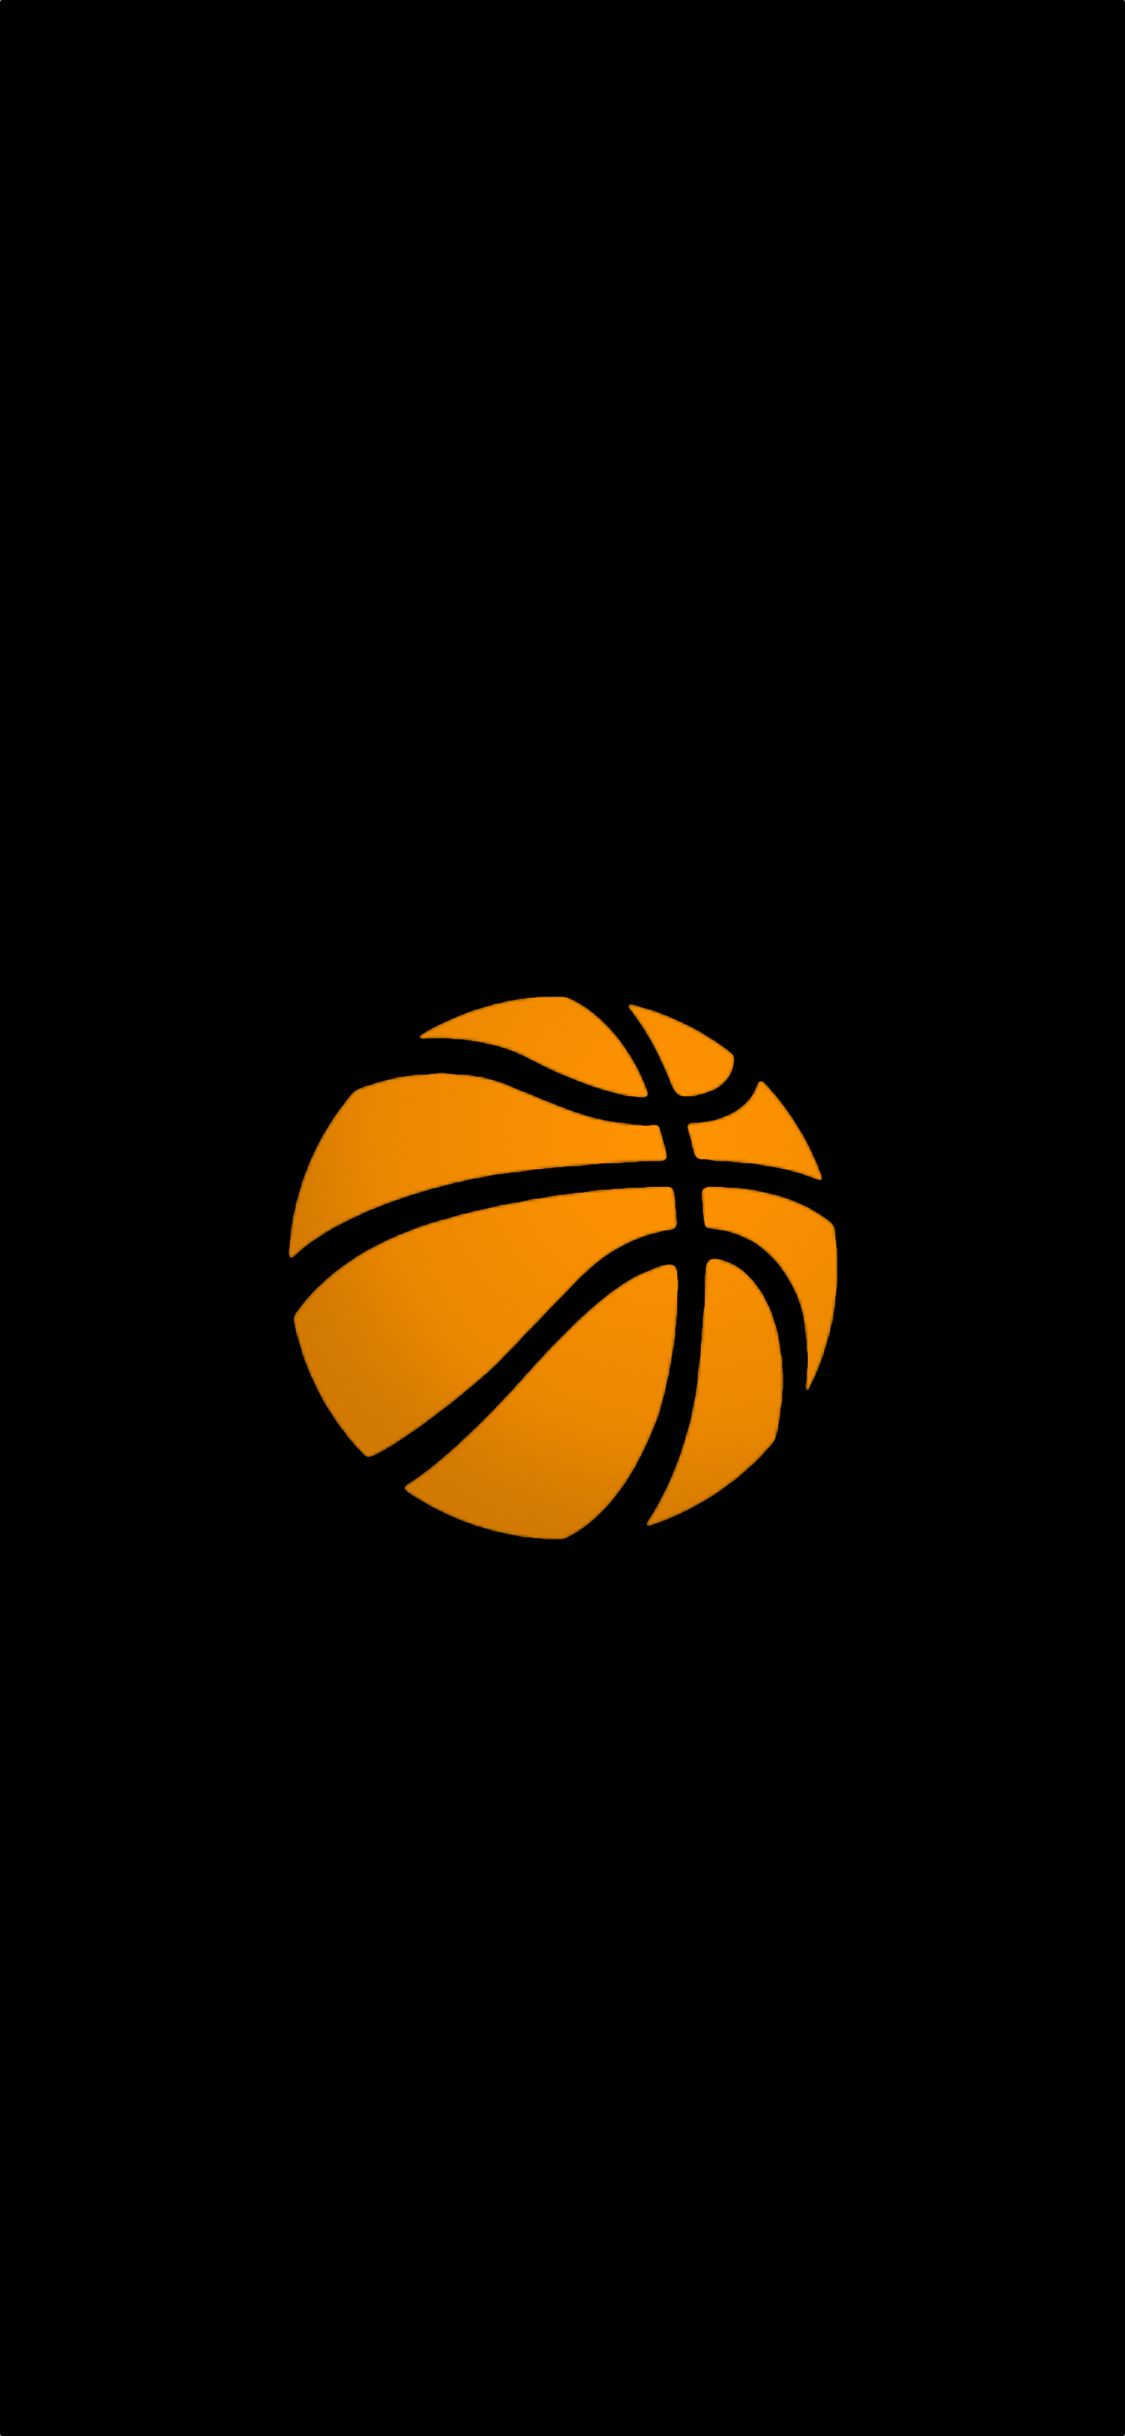 Baloncesto iPhone Fondos de pantalla - Top gratis Baloncesto iPhone